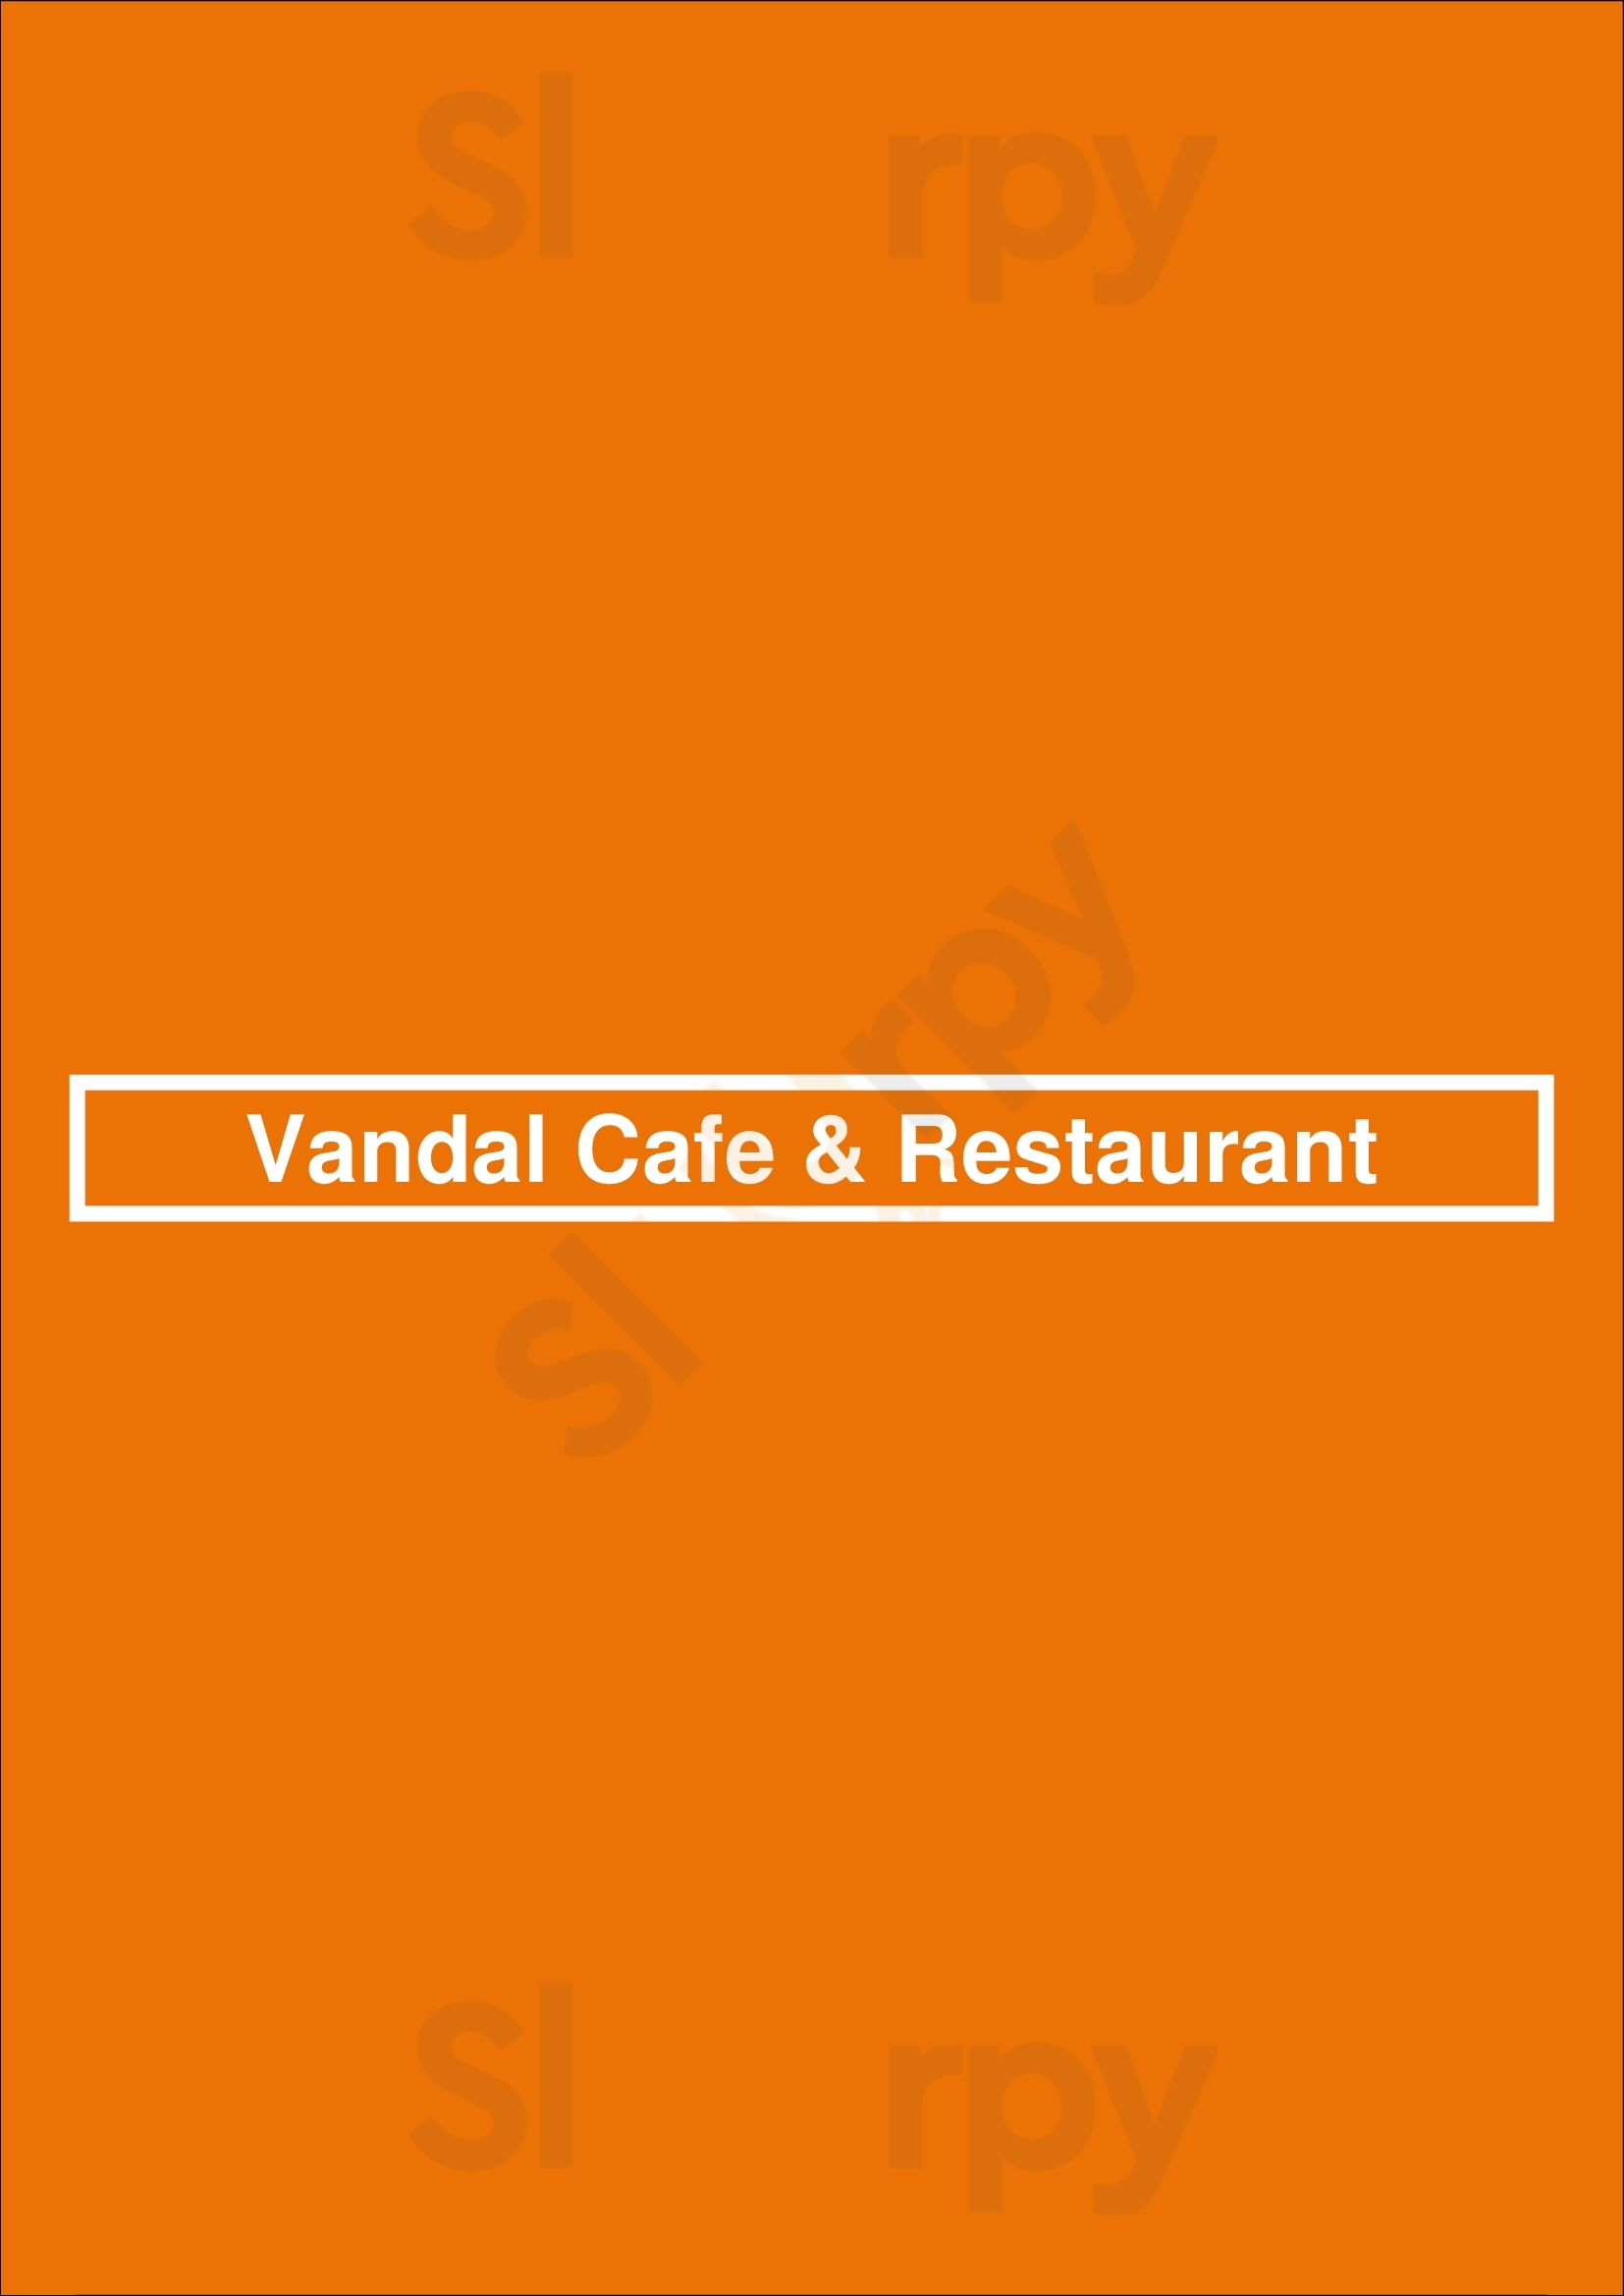 Vandal Cafe & Restaurant Dublin Menu - 1